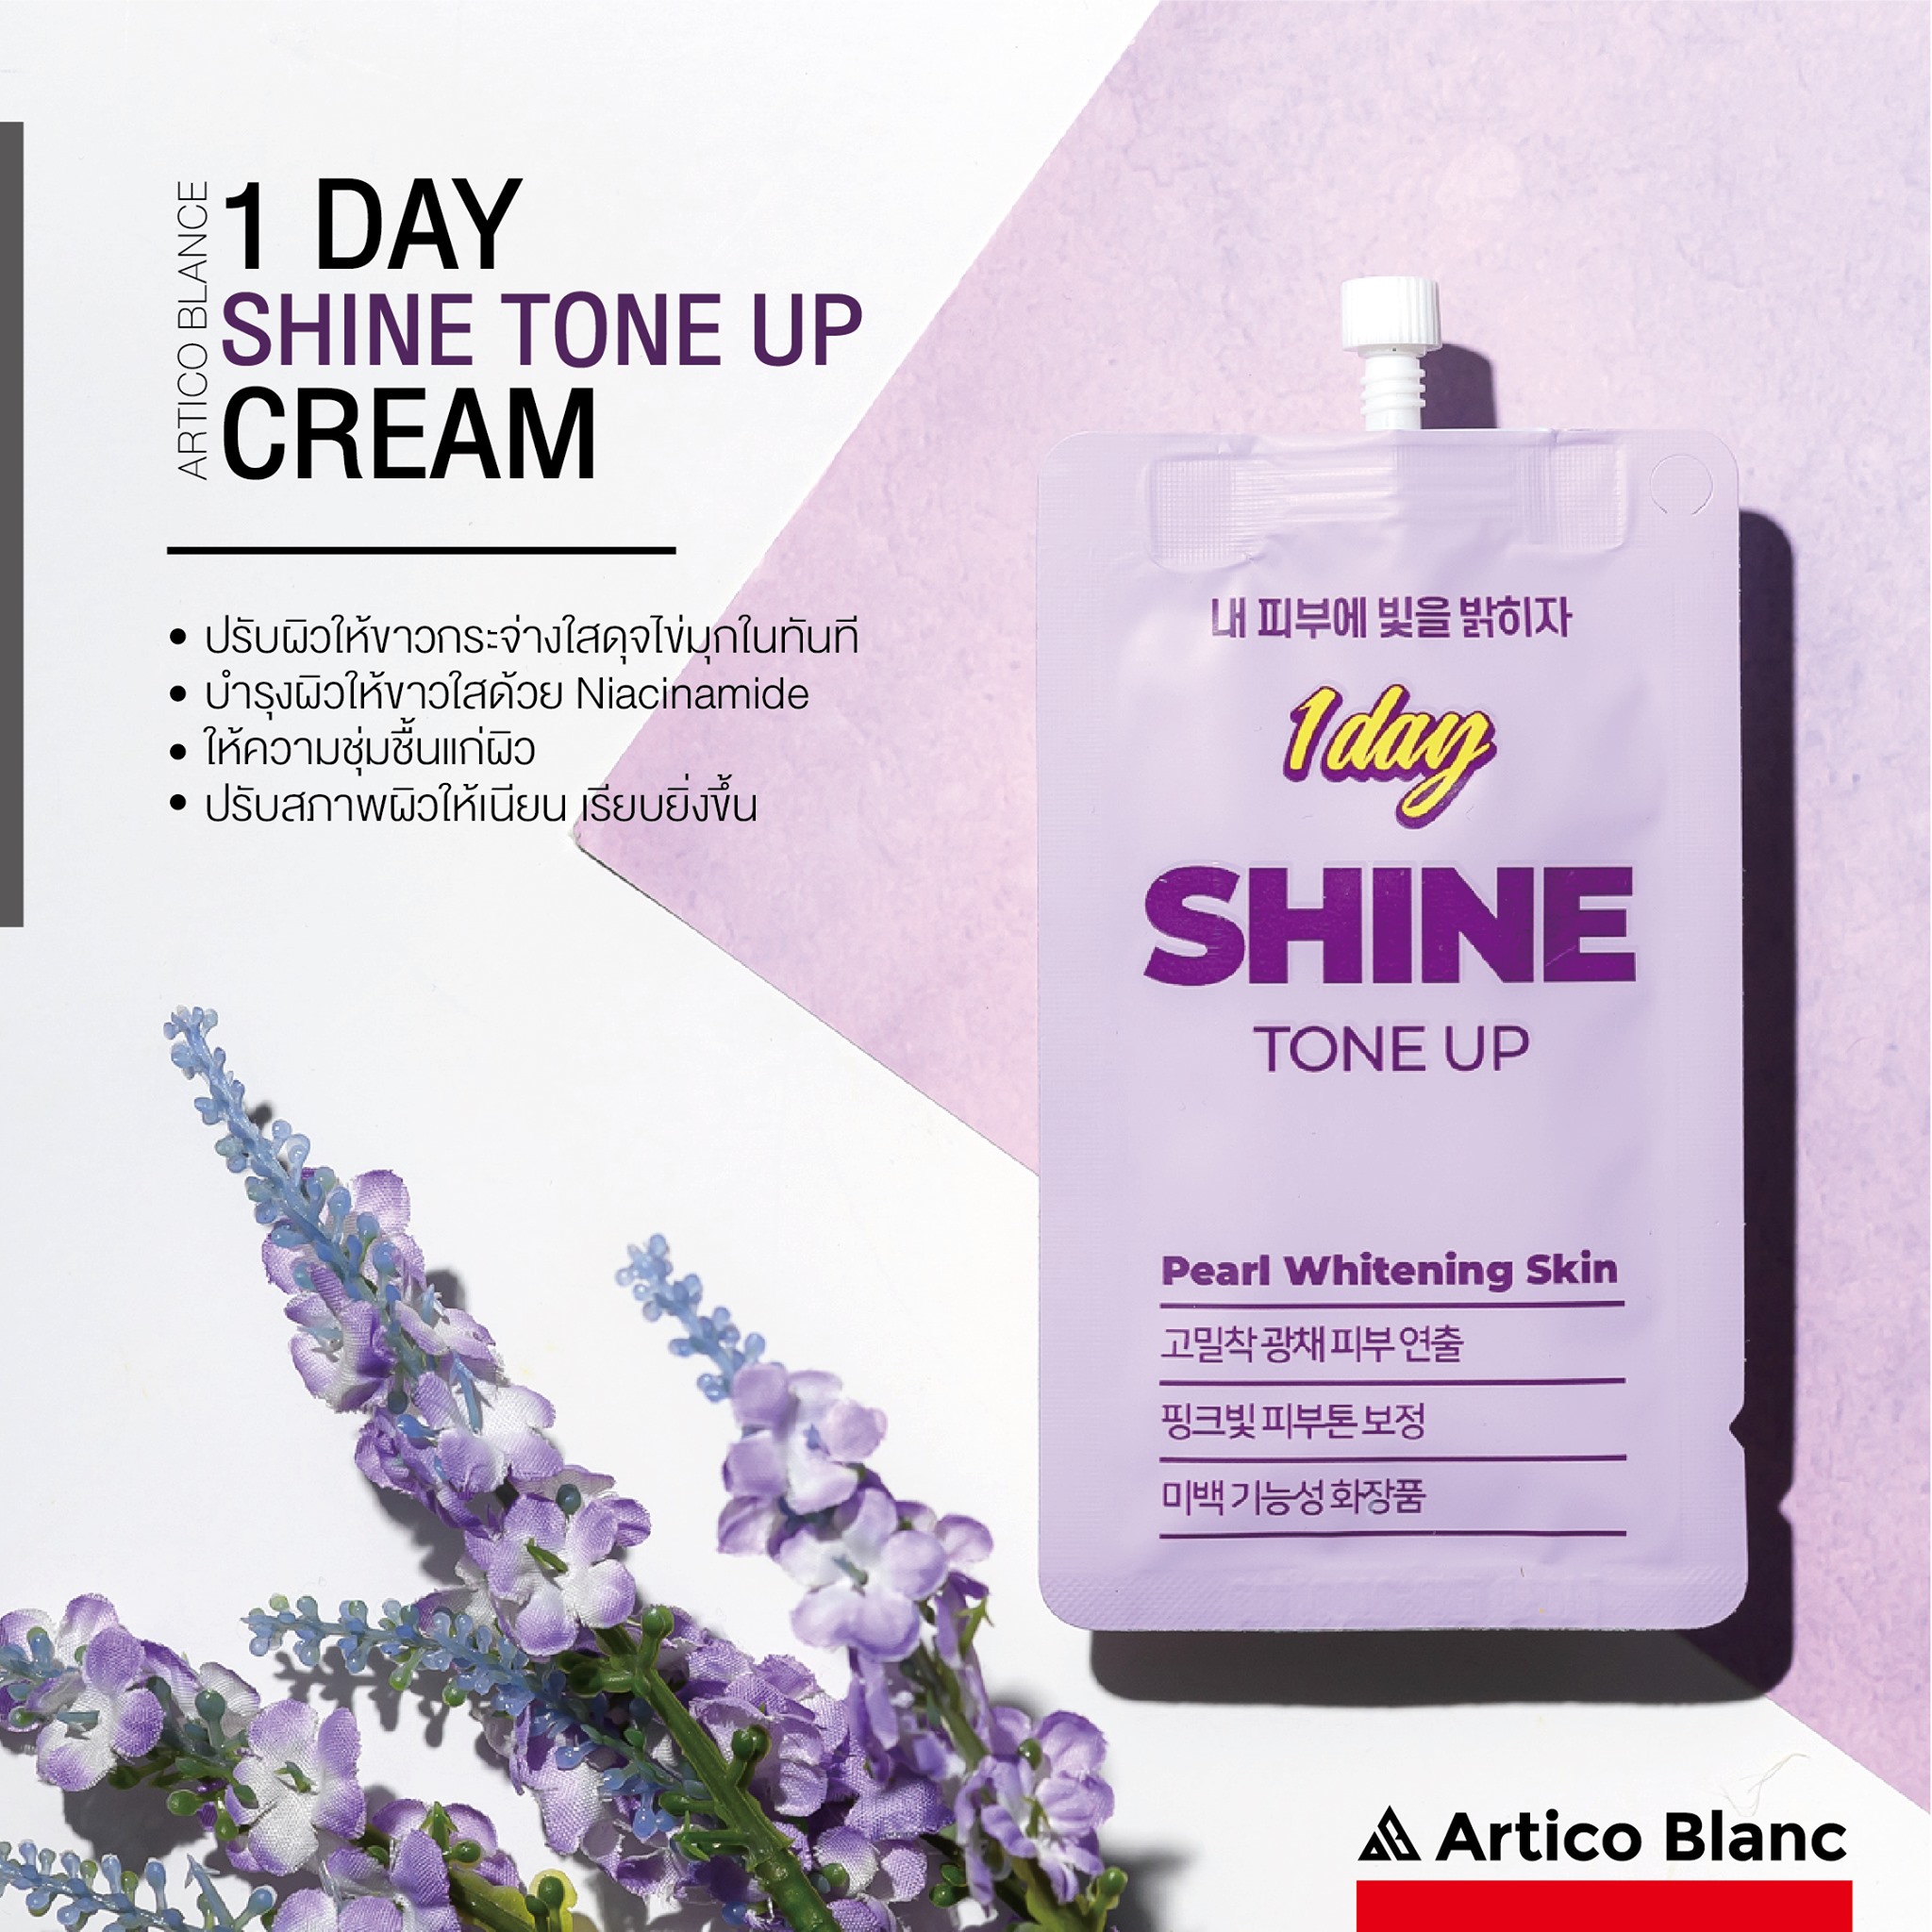 ARTICO BLANC 1 Day Shine Tone Up Cream ครีมโทนอัพบำรุงผิว พร้อมเป็นเมคอัพเบสอีกชั้น ให้ผิวกระจ่างใสอีกระดับ